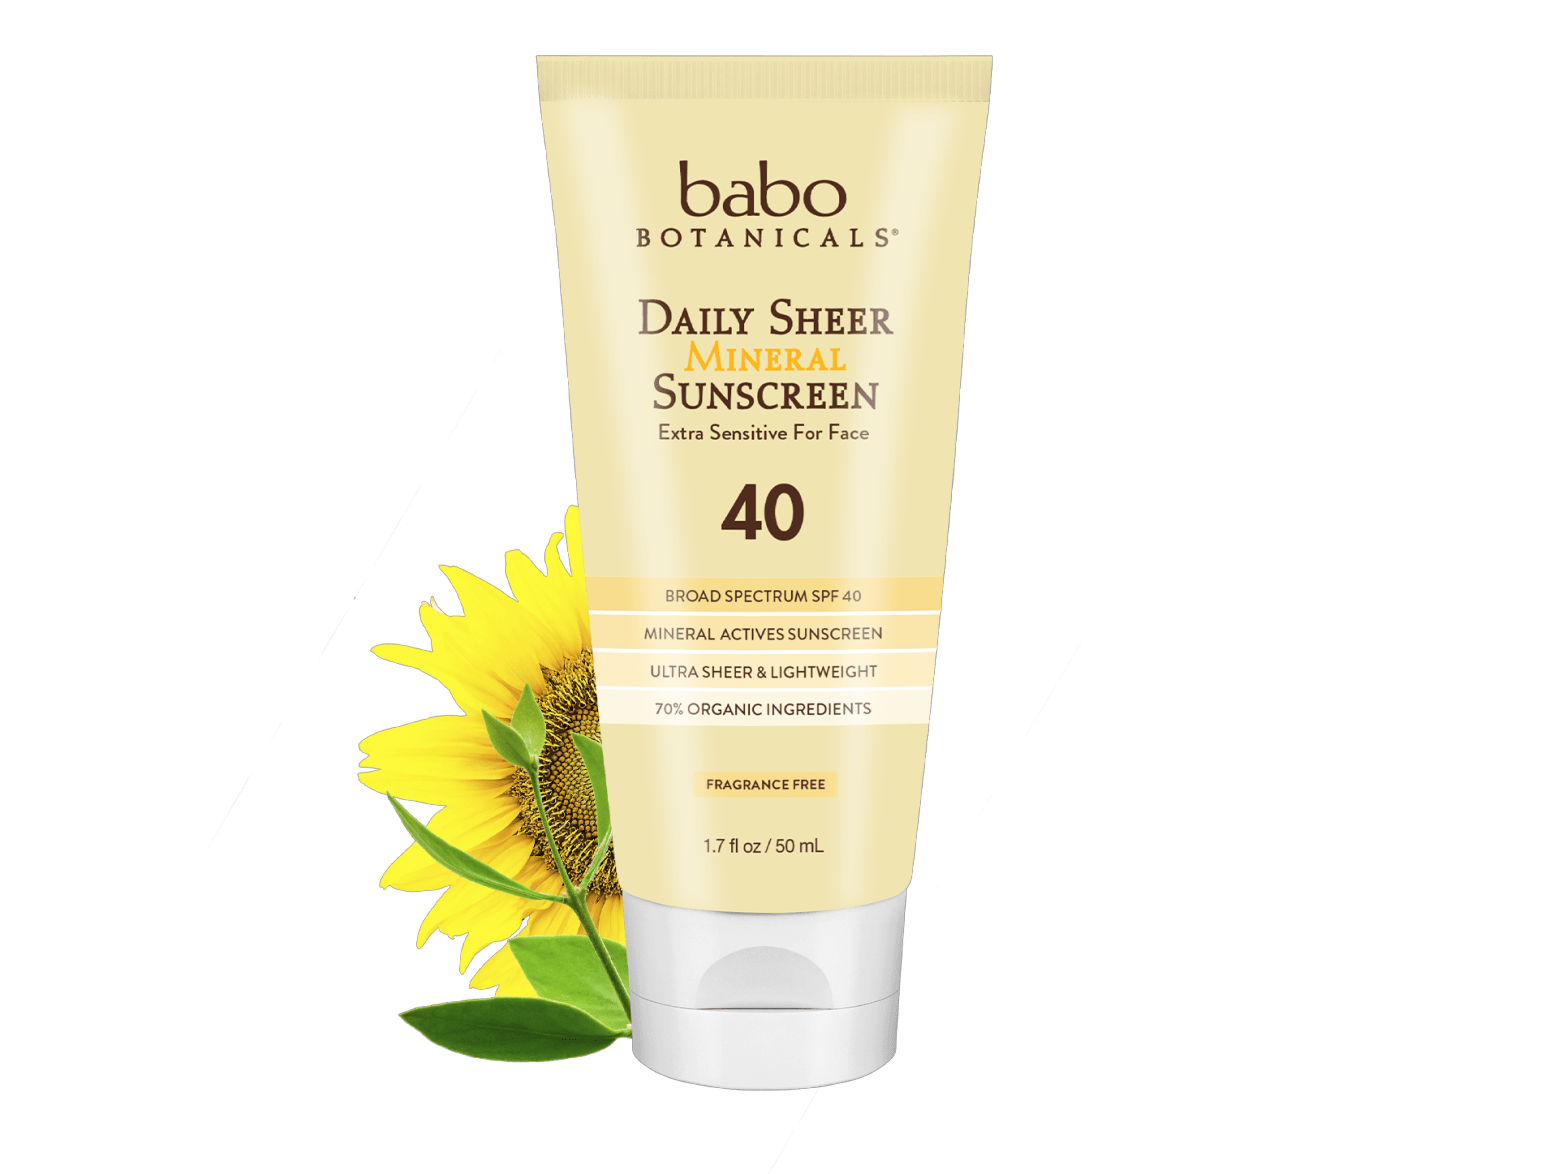 babo botanicals daily sheer facial sunscreen spf 40 dupe